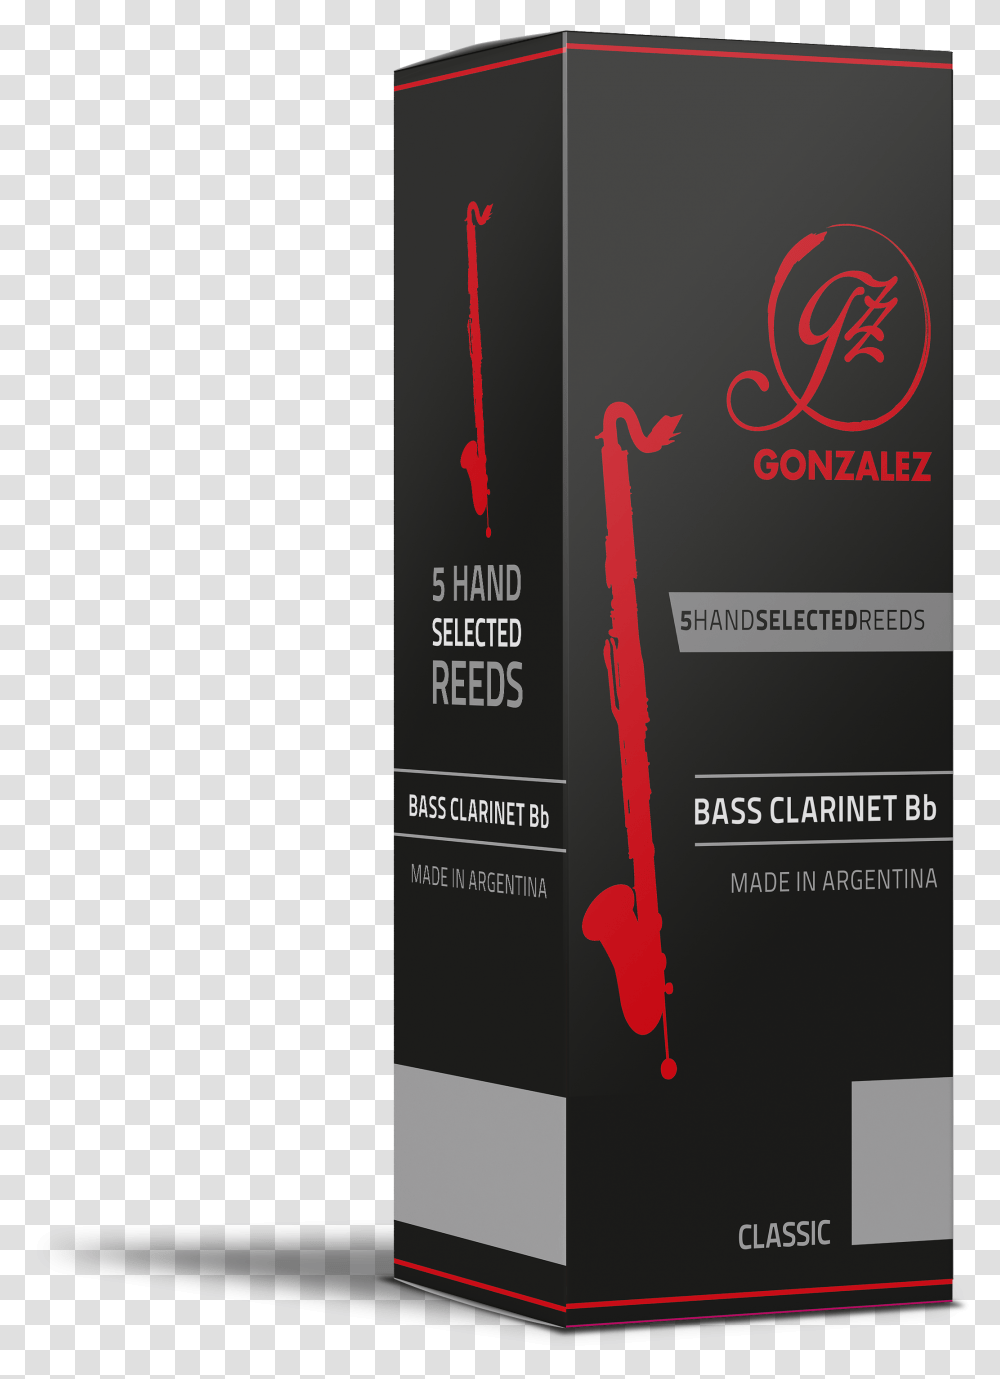 Bass Clarinet, Label, Paper, Bottle Transparent Png